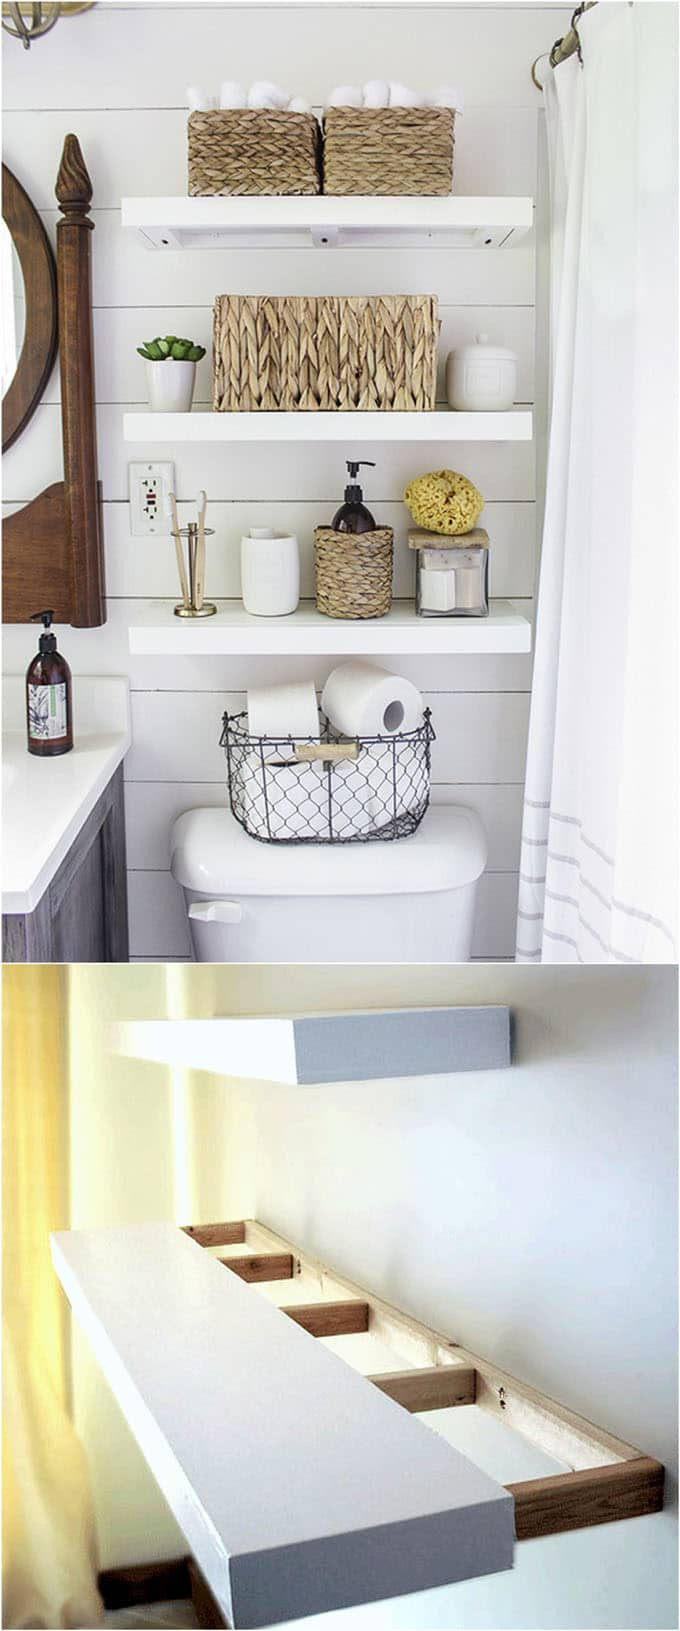 Wall Shelves Bathroom
 16 Easy and Stylish DIY Floating Shelves & Wall Shelves